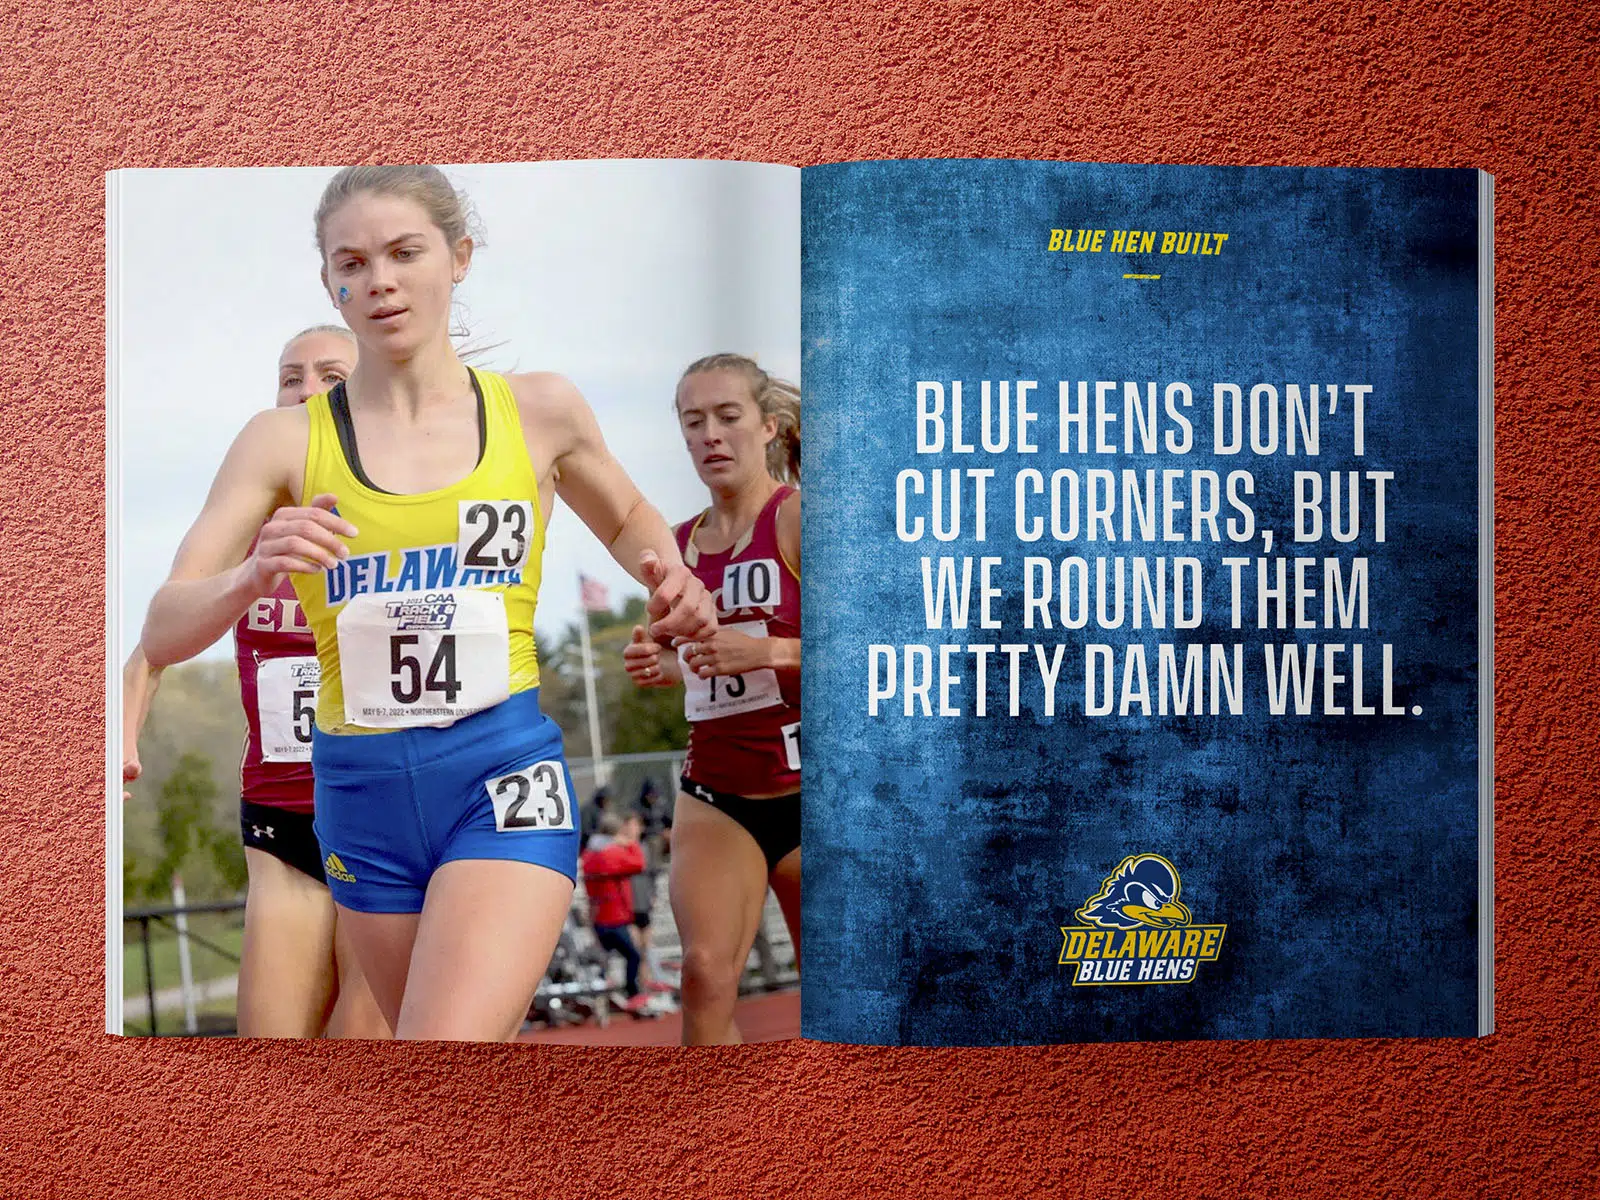 University of Delaware Athletics - Advertising Campaign